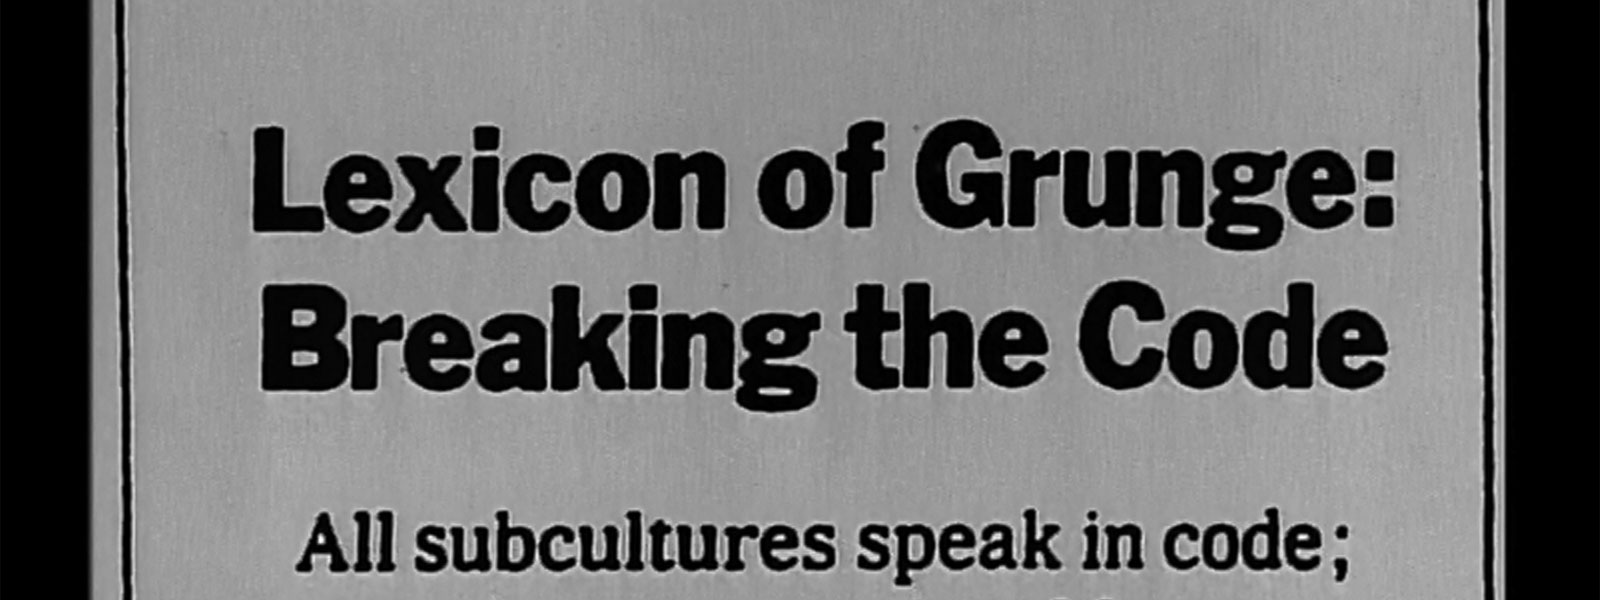 Lexicon of Grunge